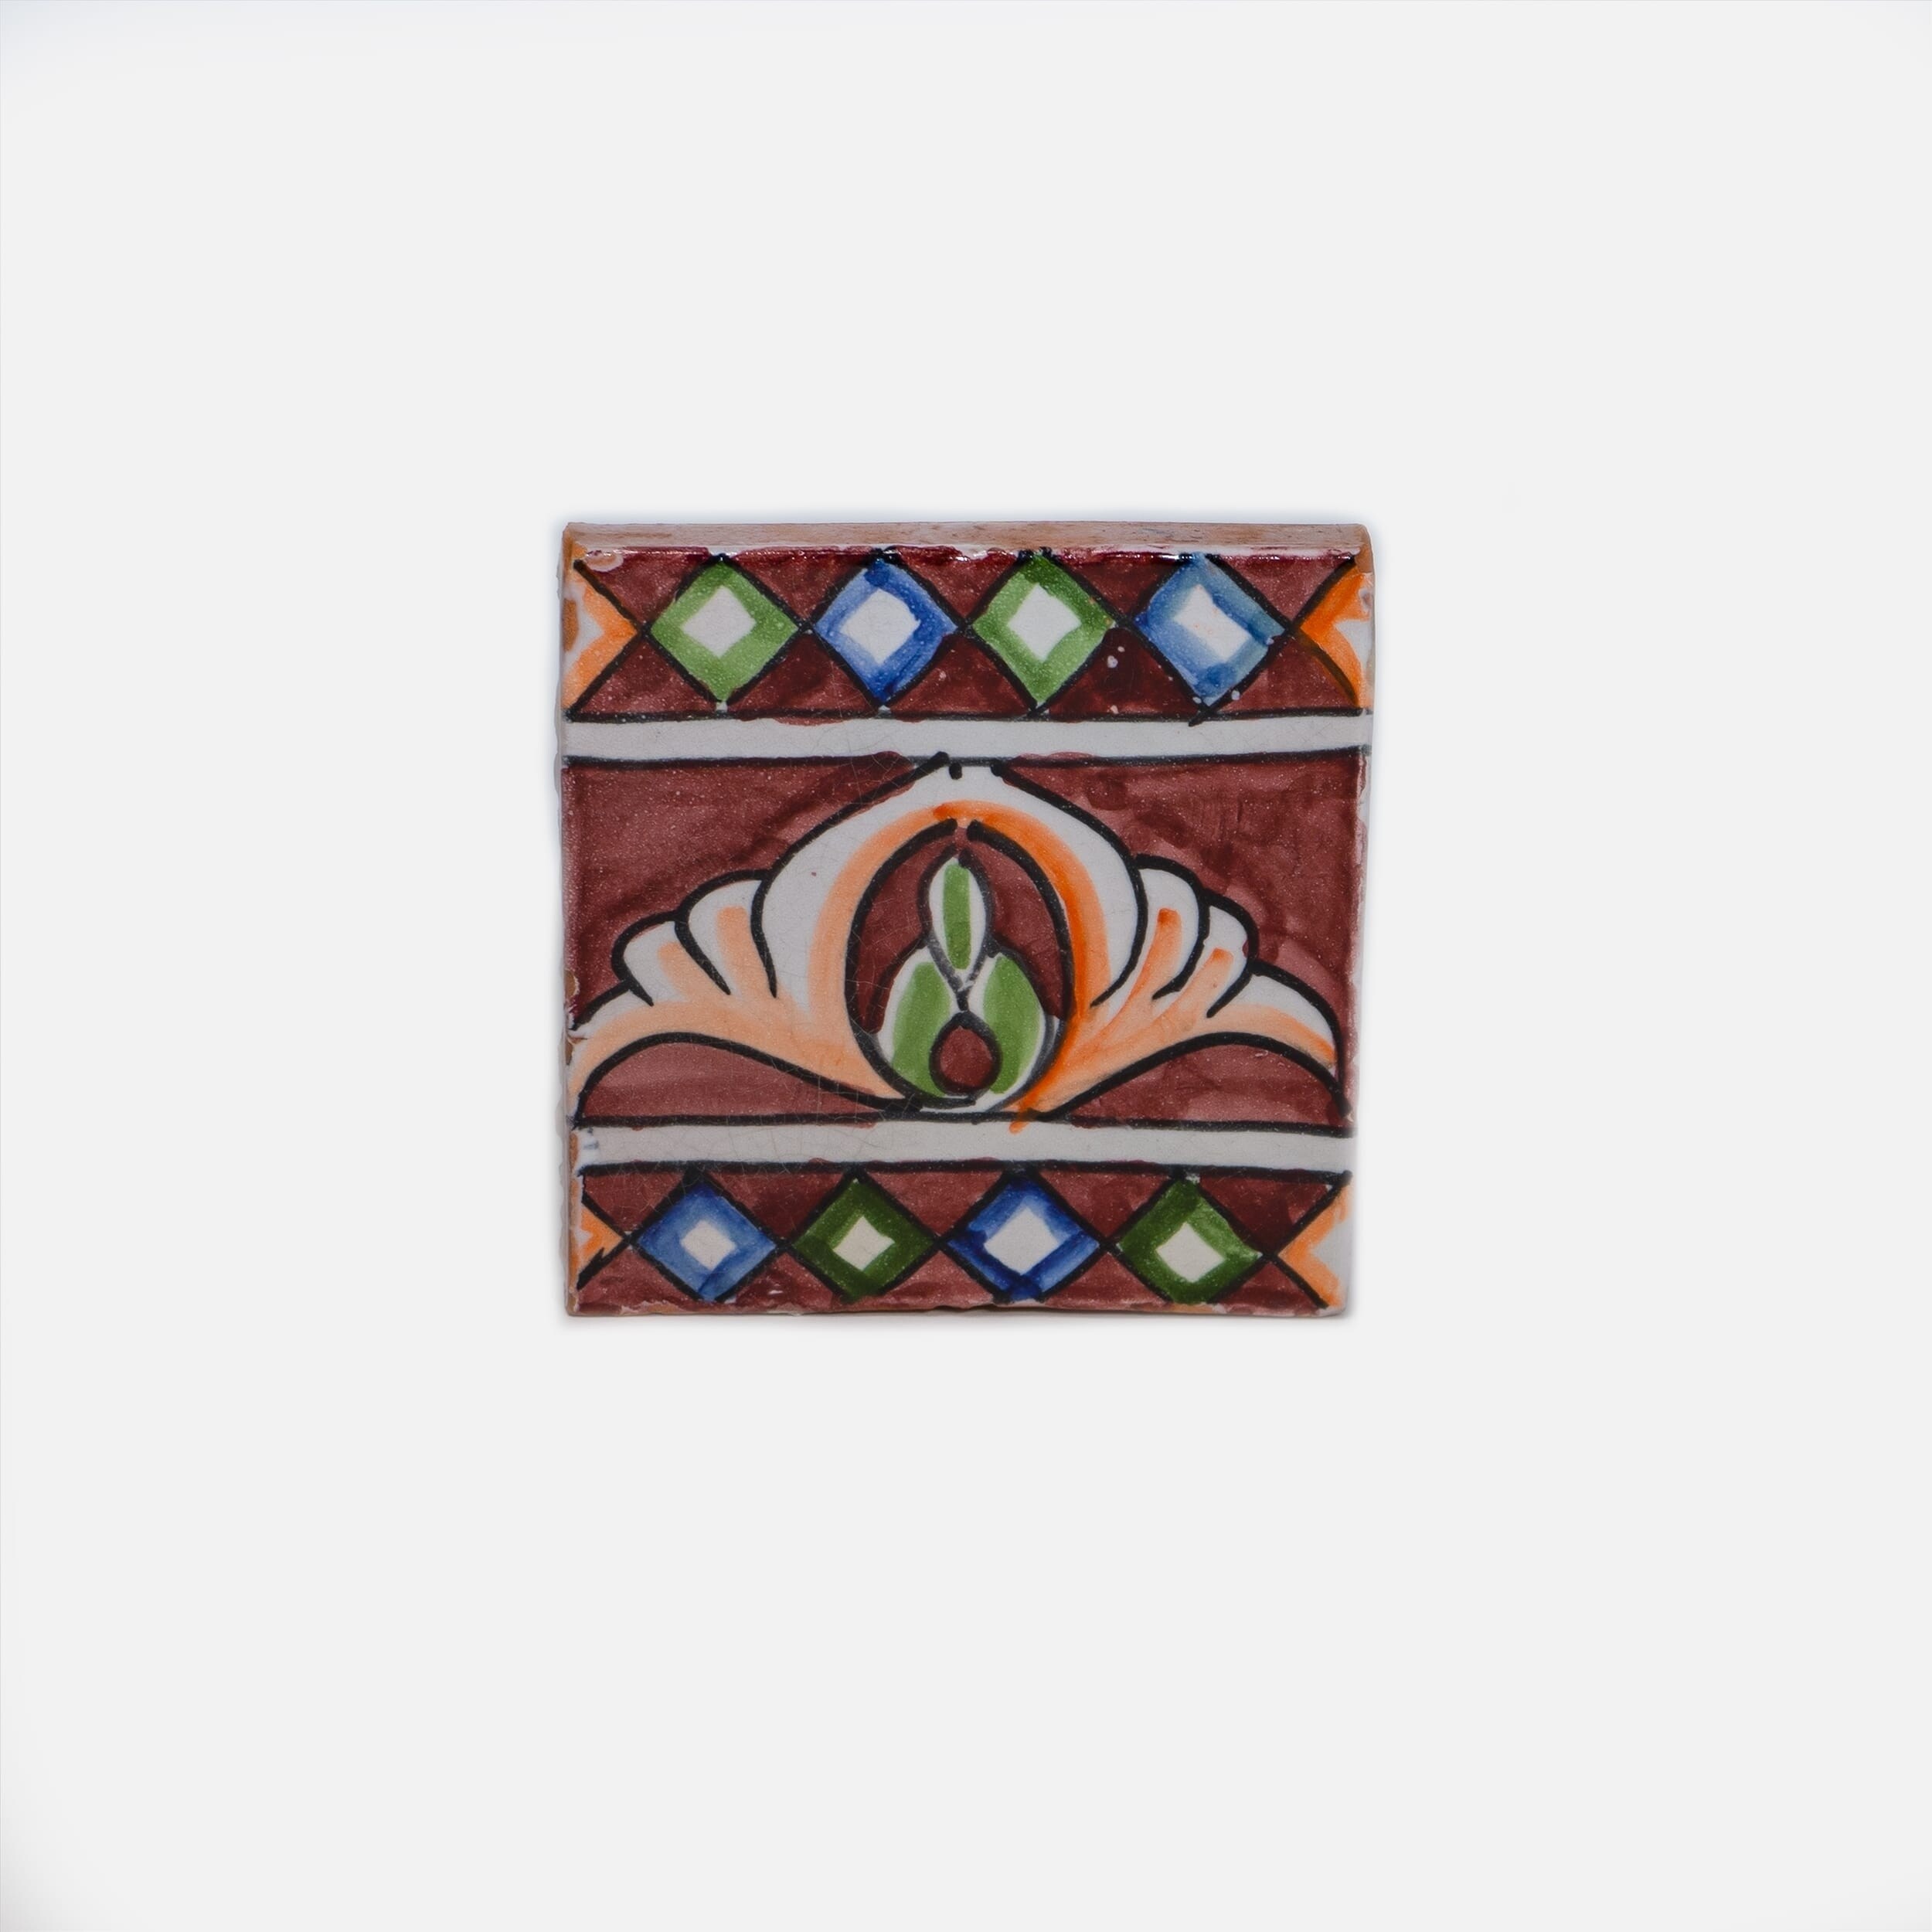 Handmade Border Tile (Morocco) - 4 x 4